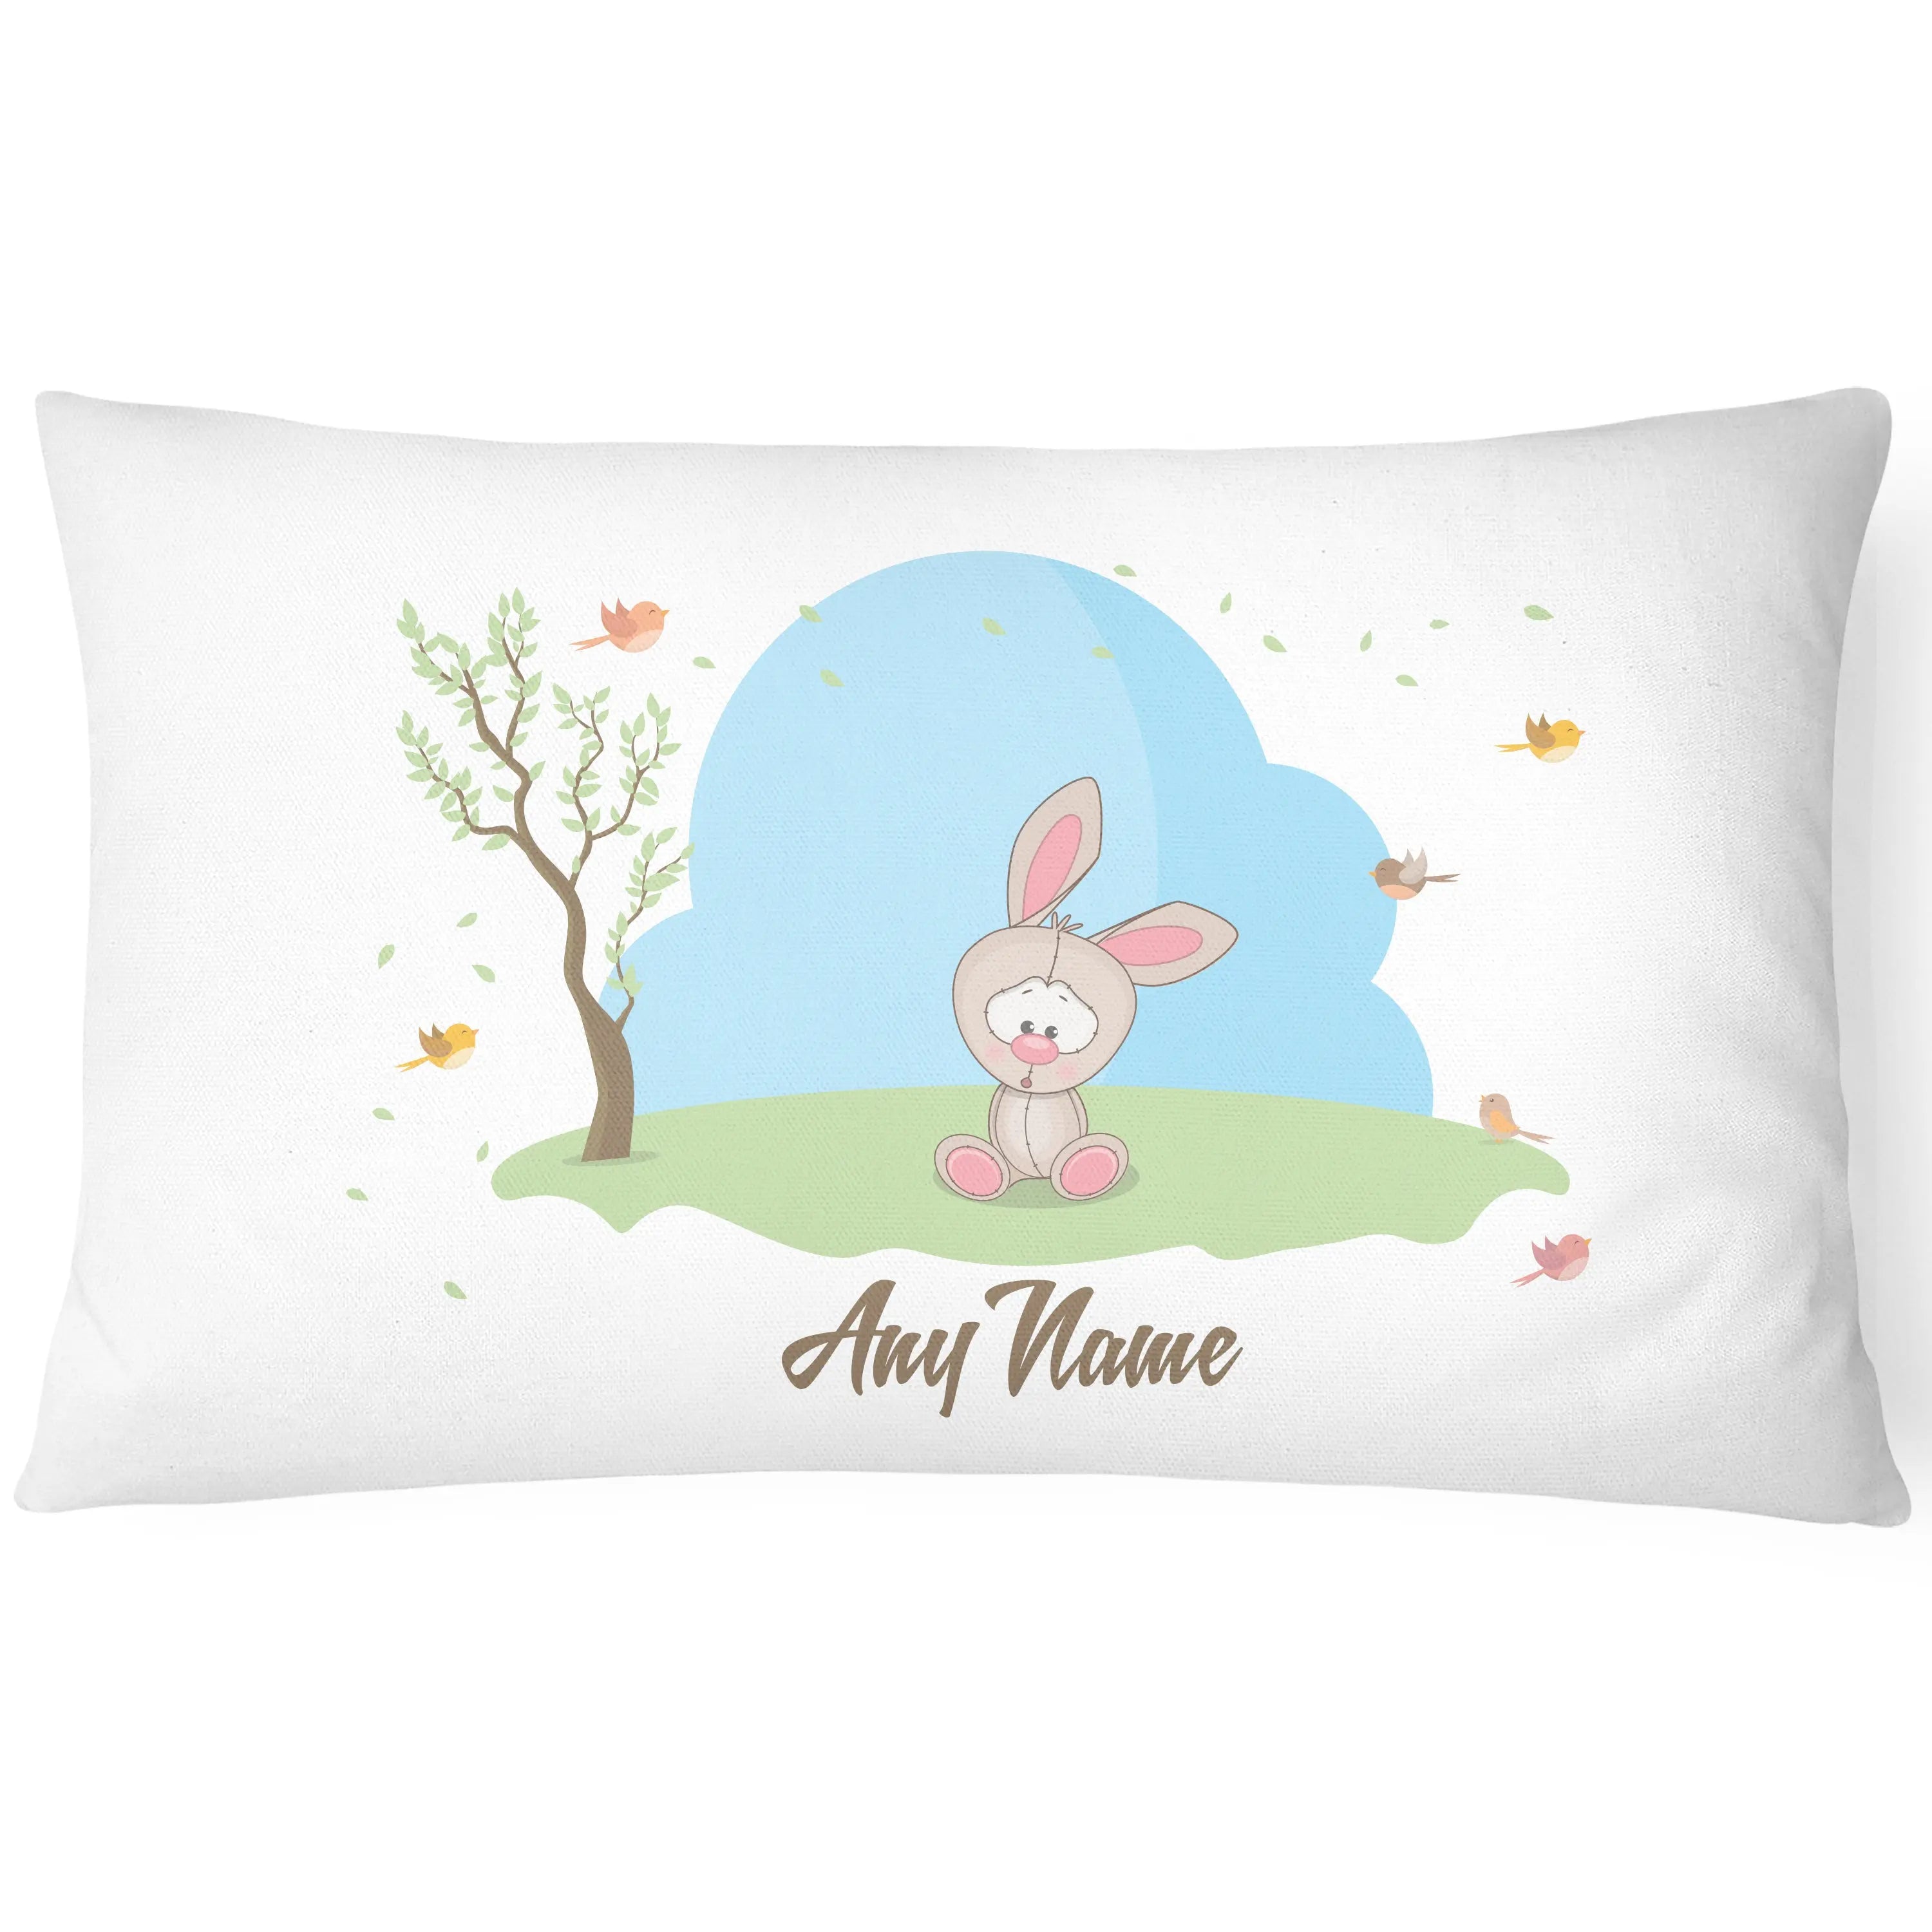 Personalised Children's Pillowcase Cute Animal - Charming - CushionPop